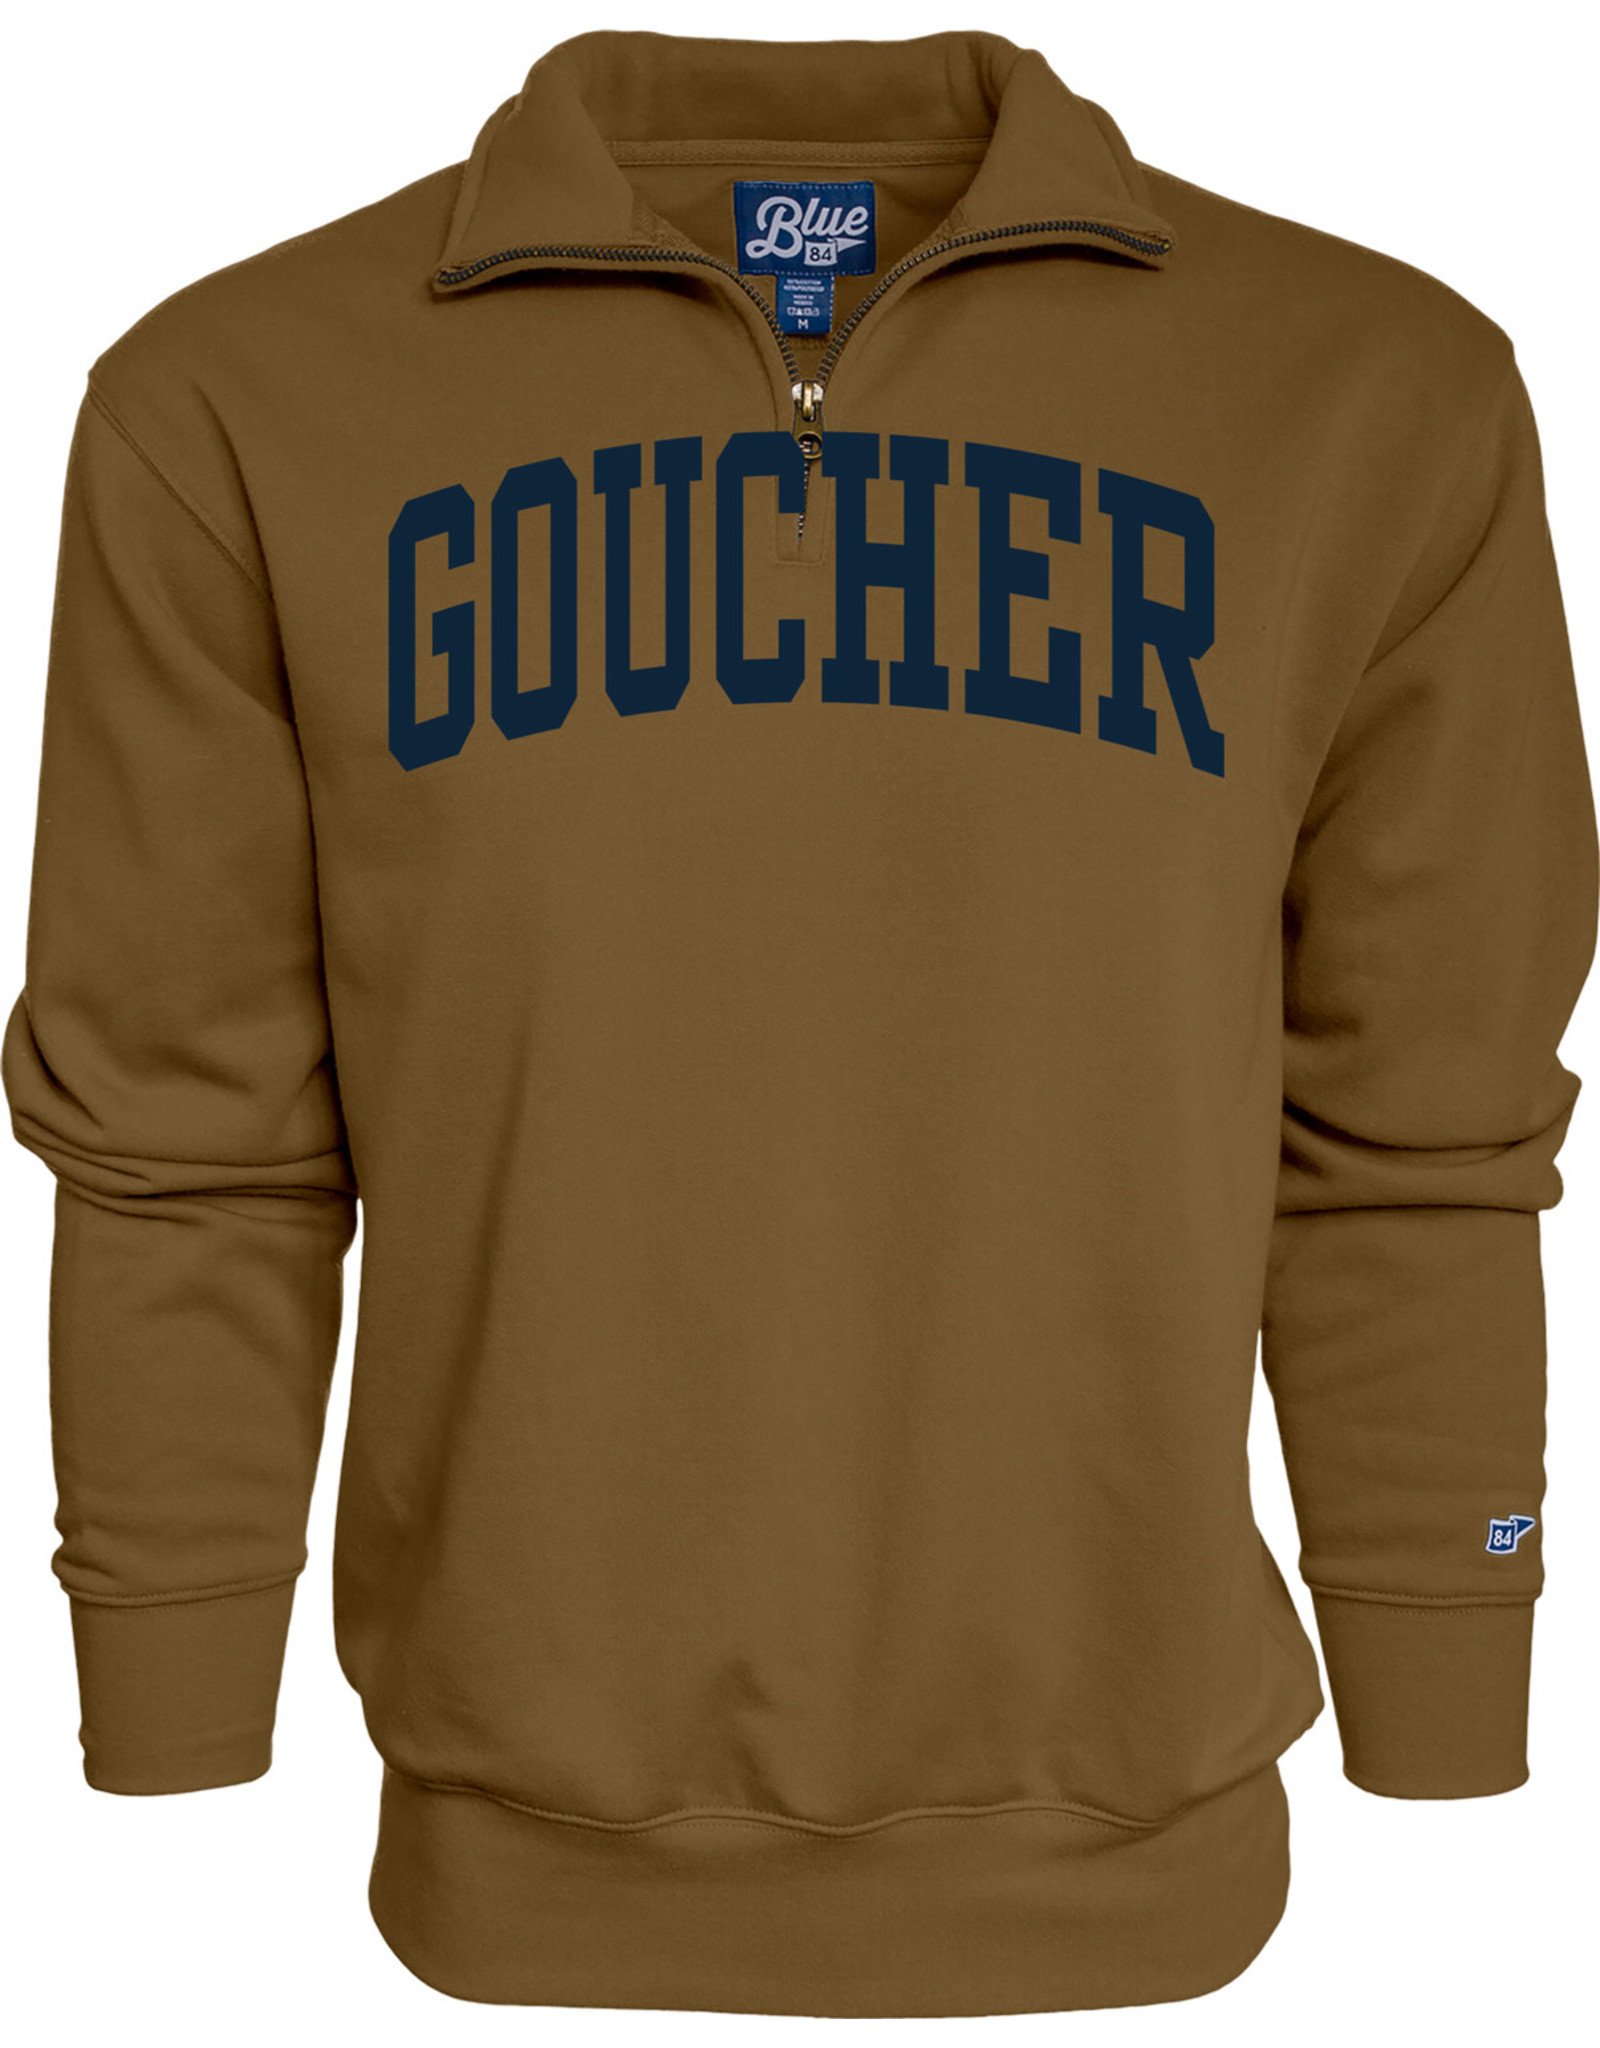 Blue84 Big Detroit 1/4 Zip Sweatshirt "Goucher"